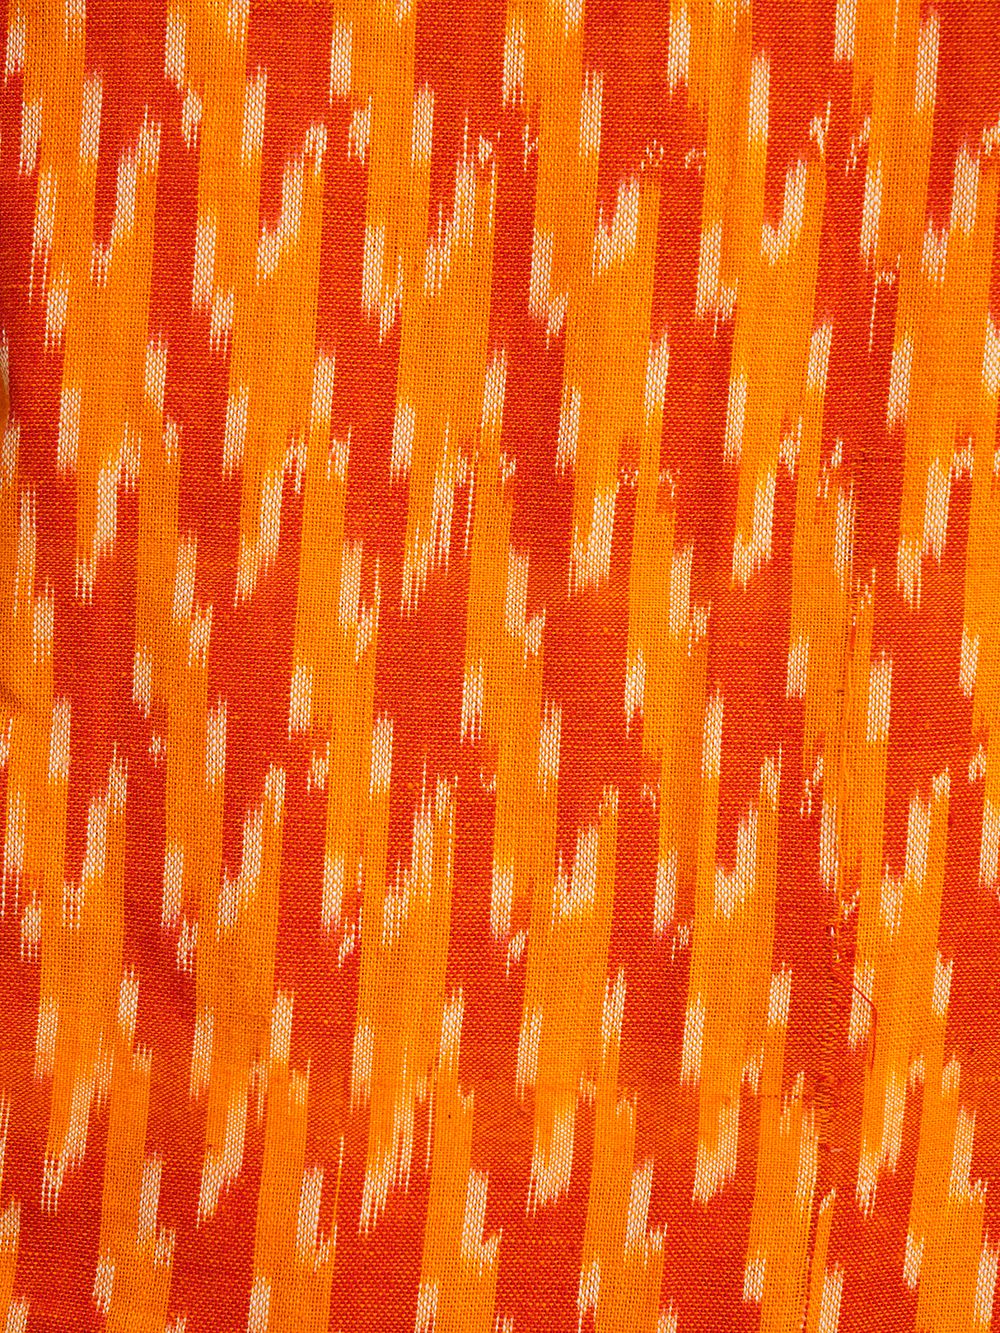 Orange -Blue Ikat mercerised  Cotton Fabric with Dupatta  (Set Of 3)